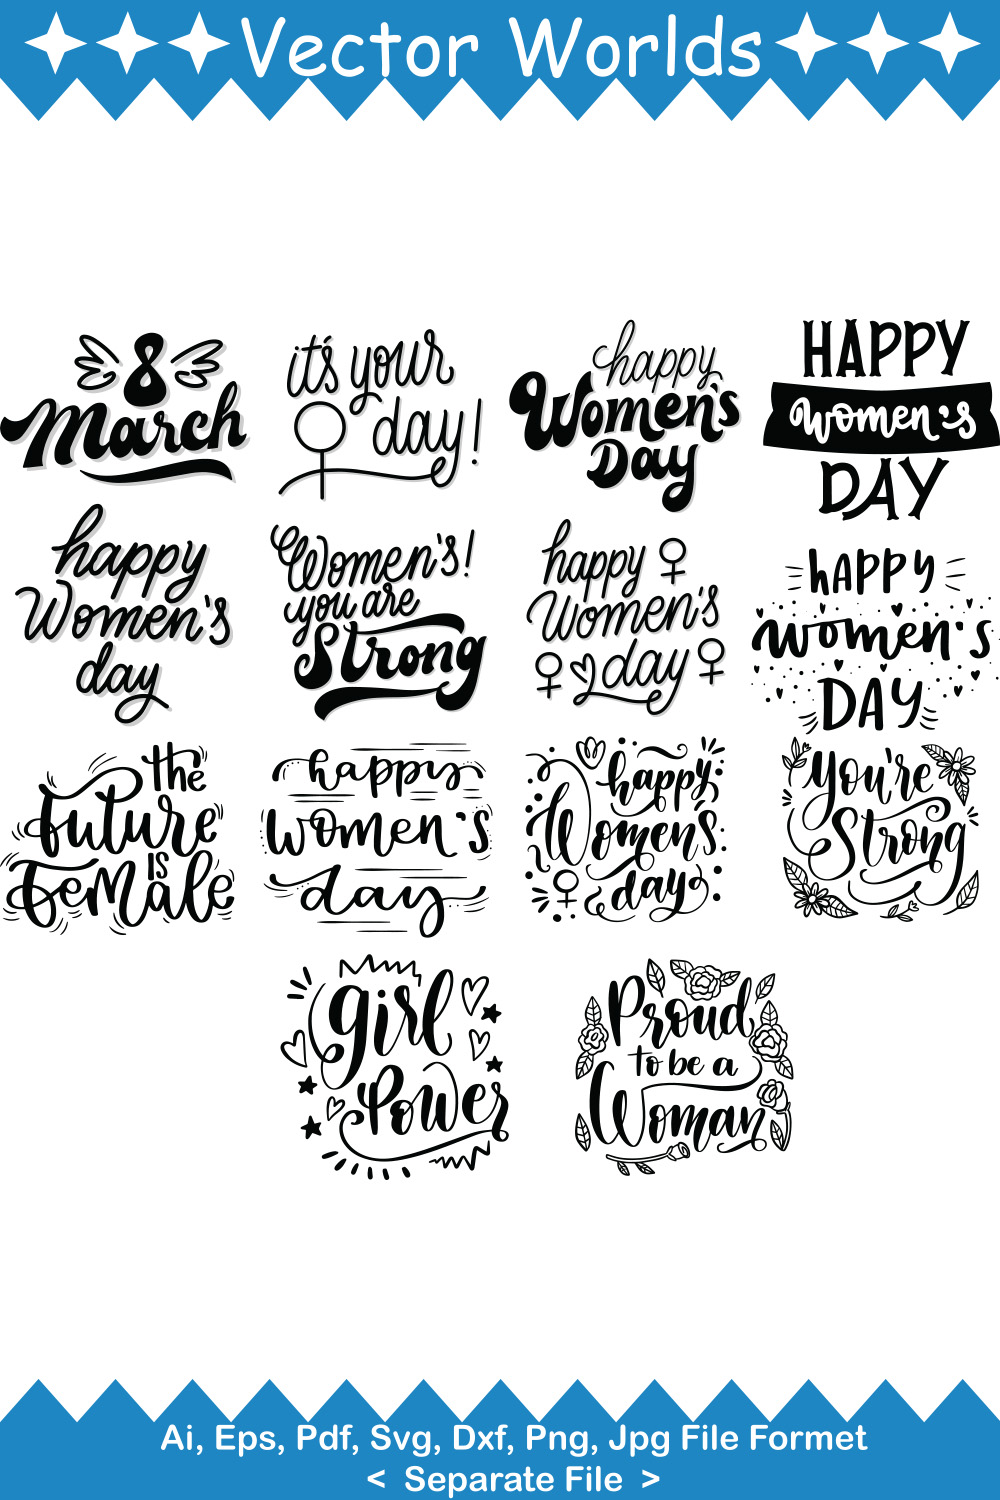 Happy women's Day SVG Vector Design pinterest preview image.